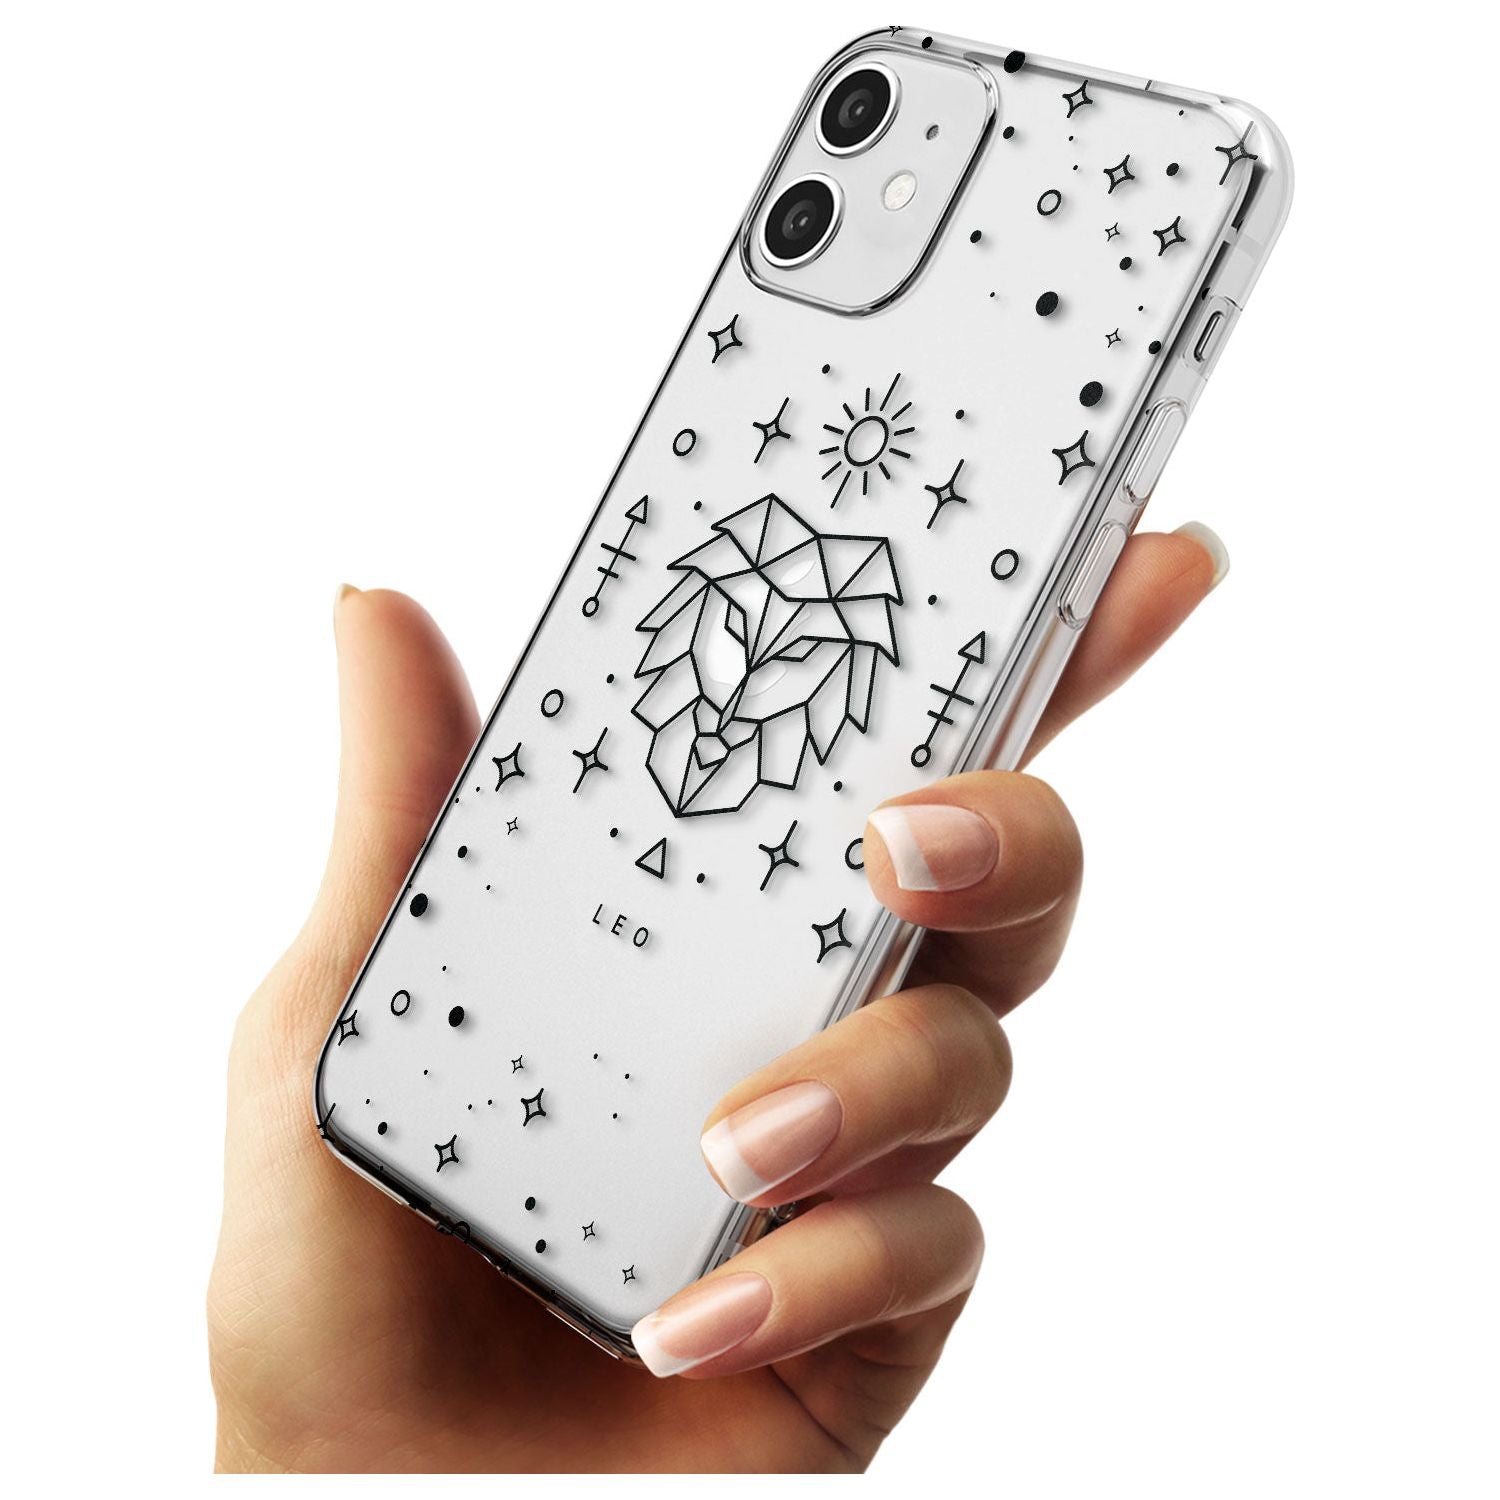 Leo Emblem - Transparent Design Slim TPU Phone Case for iPhone 11